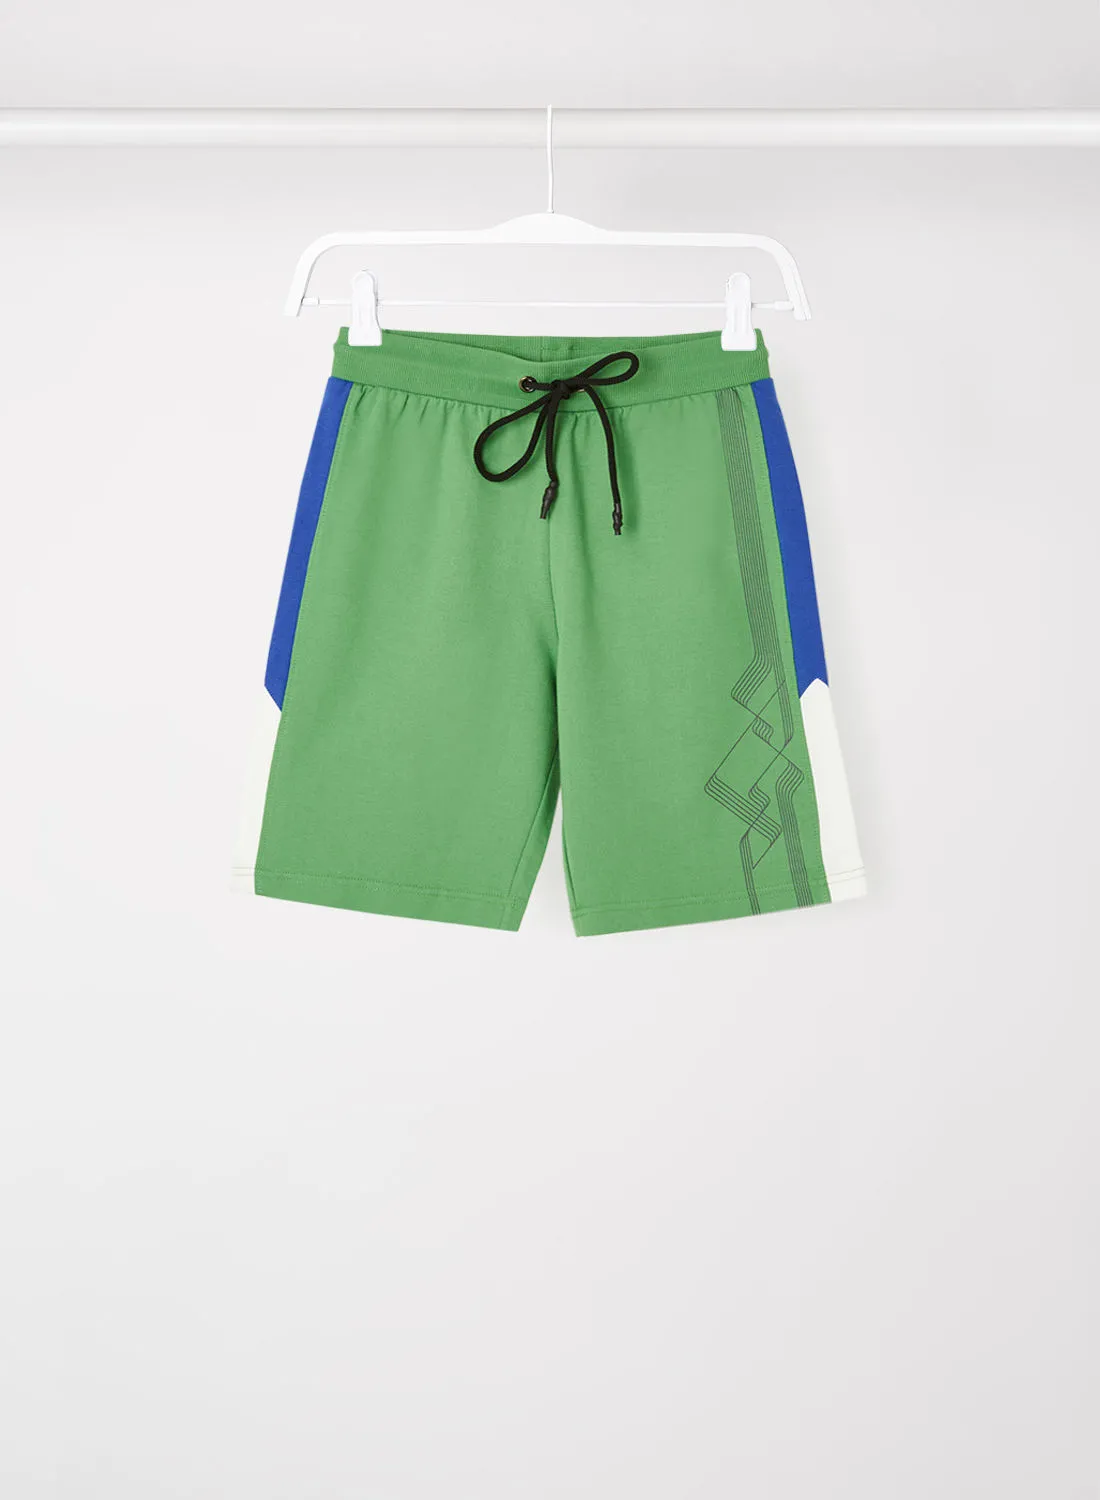 ABOF Colourblock Pattern Elastic Waistband Drawstring Shorts Mint Green/Blue/White